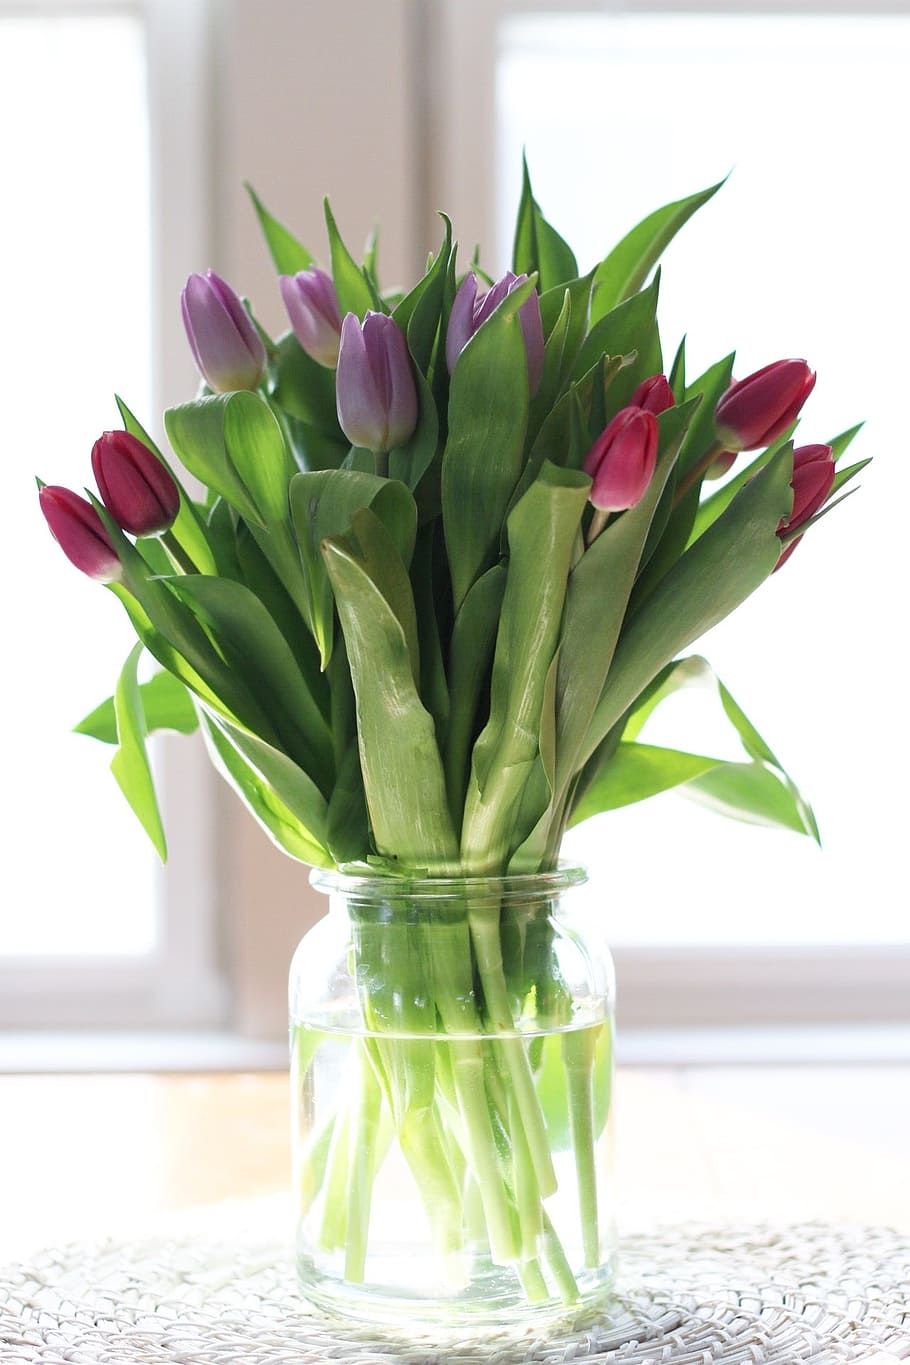 unbloomed flowers, glass vase, tulip, flowers, plant, sunlight, flora, green, purple, pink